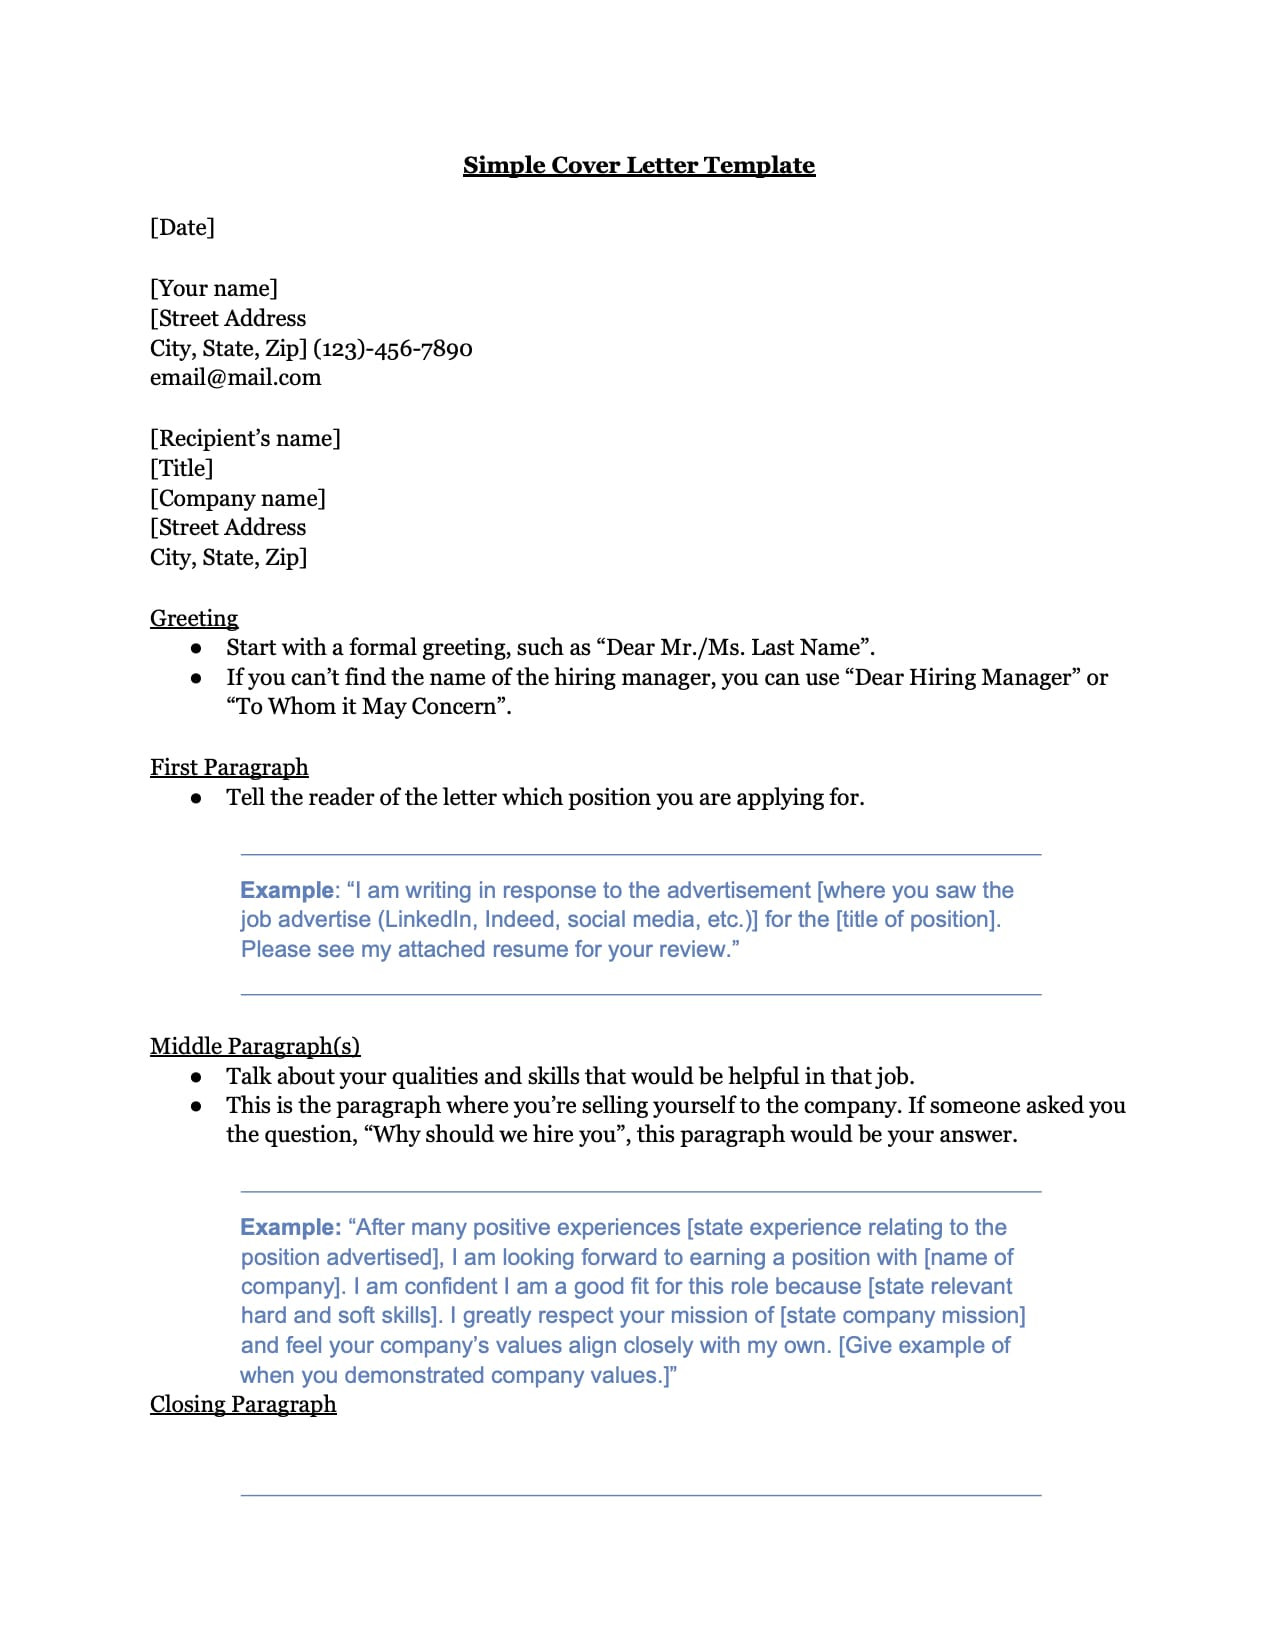 Sample Cover Letter for Resume format Cover Letter Templates From Jobscan